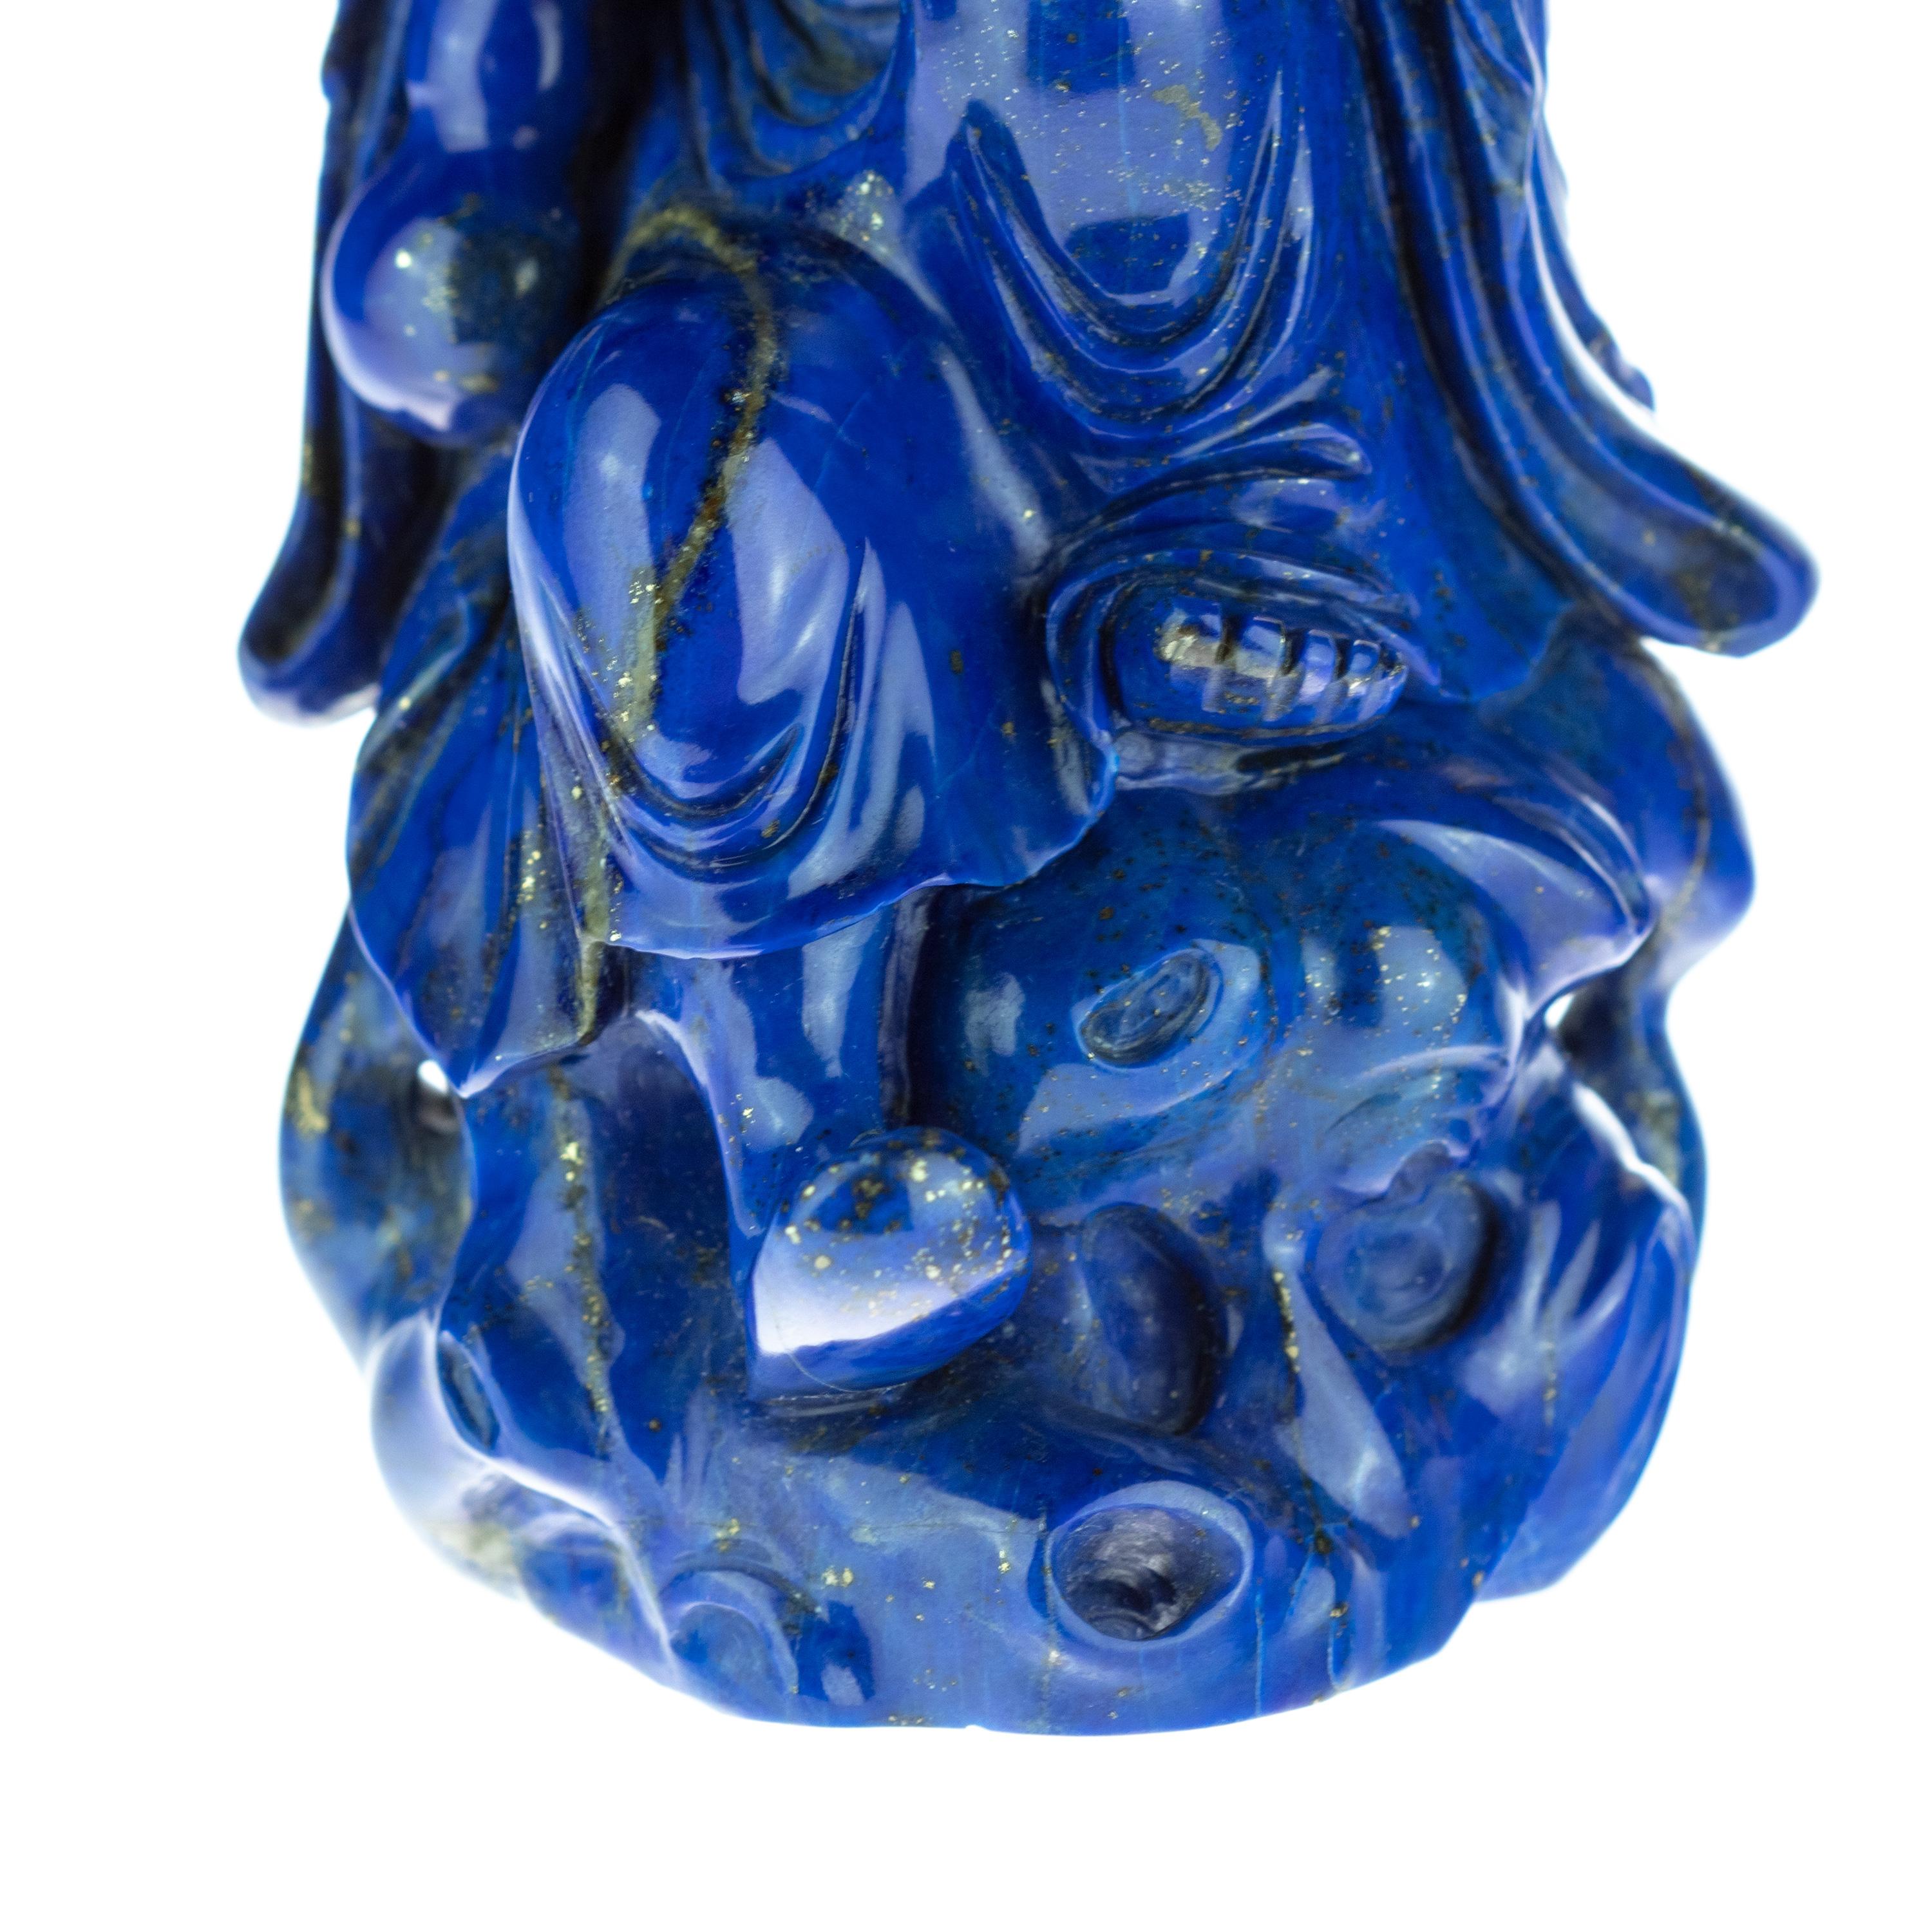 Hong Kong Lapis Lazuli Laughing Man Carved Figure Spiritual Artisanal Statue Sculpture For Sale